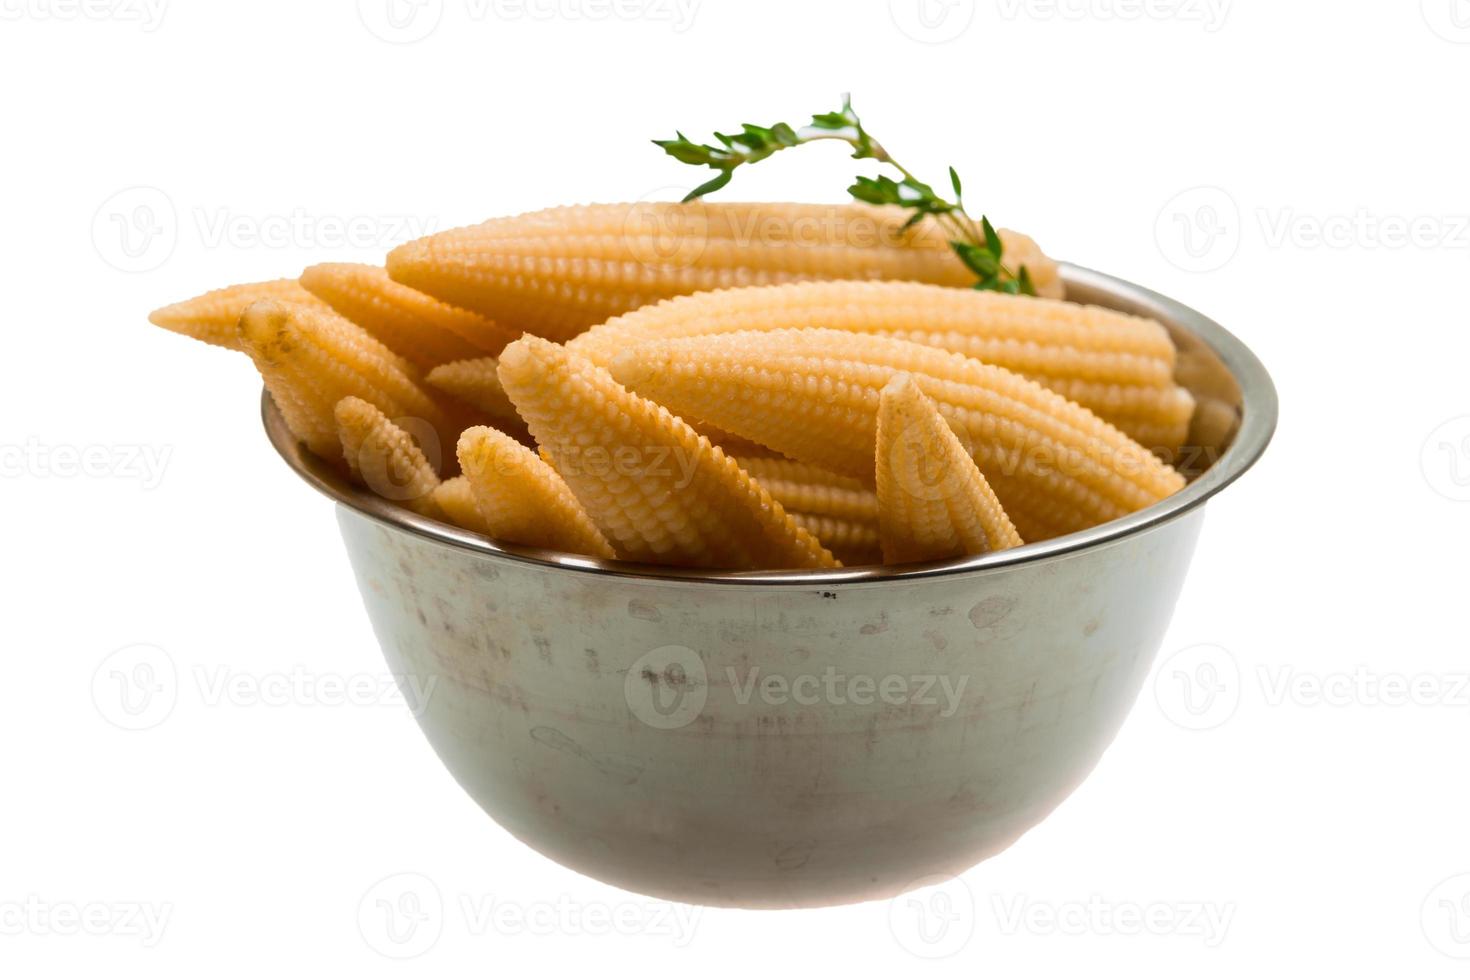 bebis majs i en skål på vit bakgrund foto